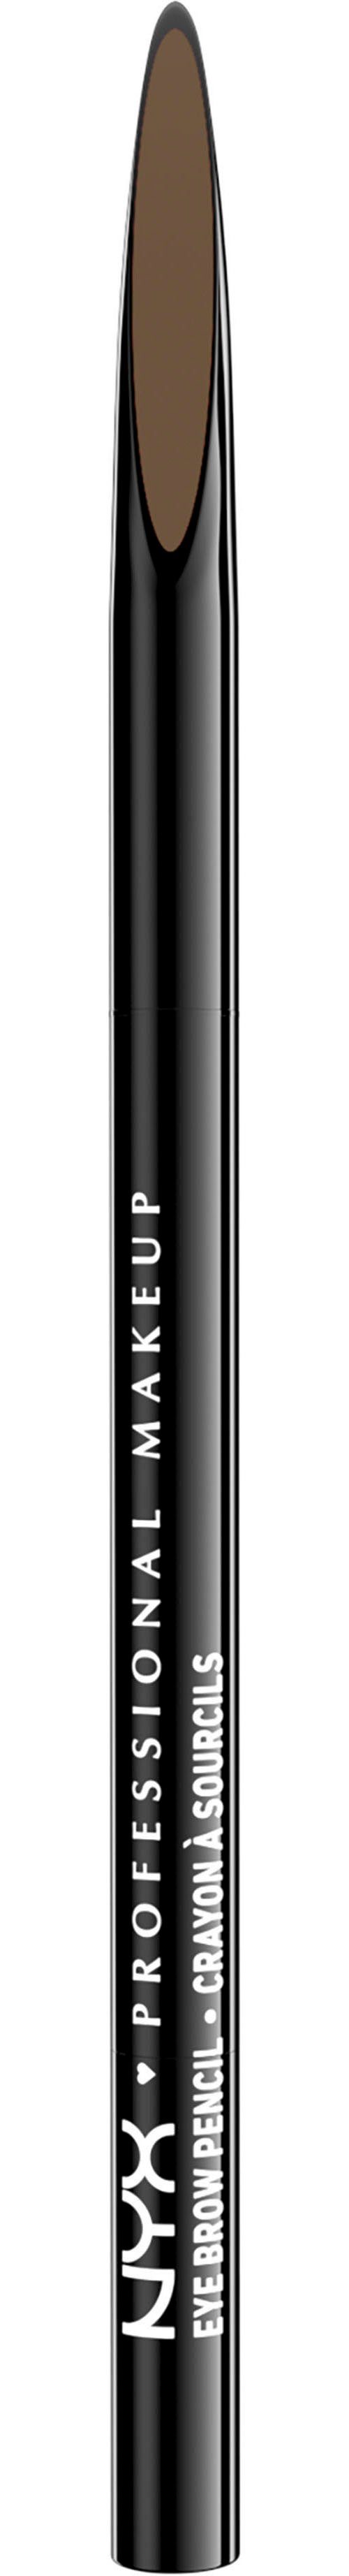 Augenbrauen-Stift Makeup Precision Pencil taupe Brow Professional NYX